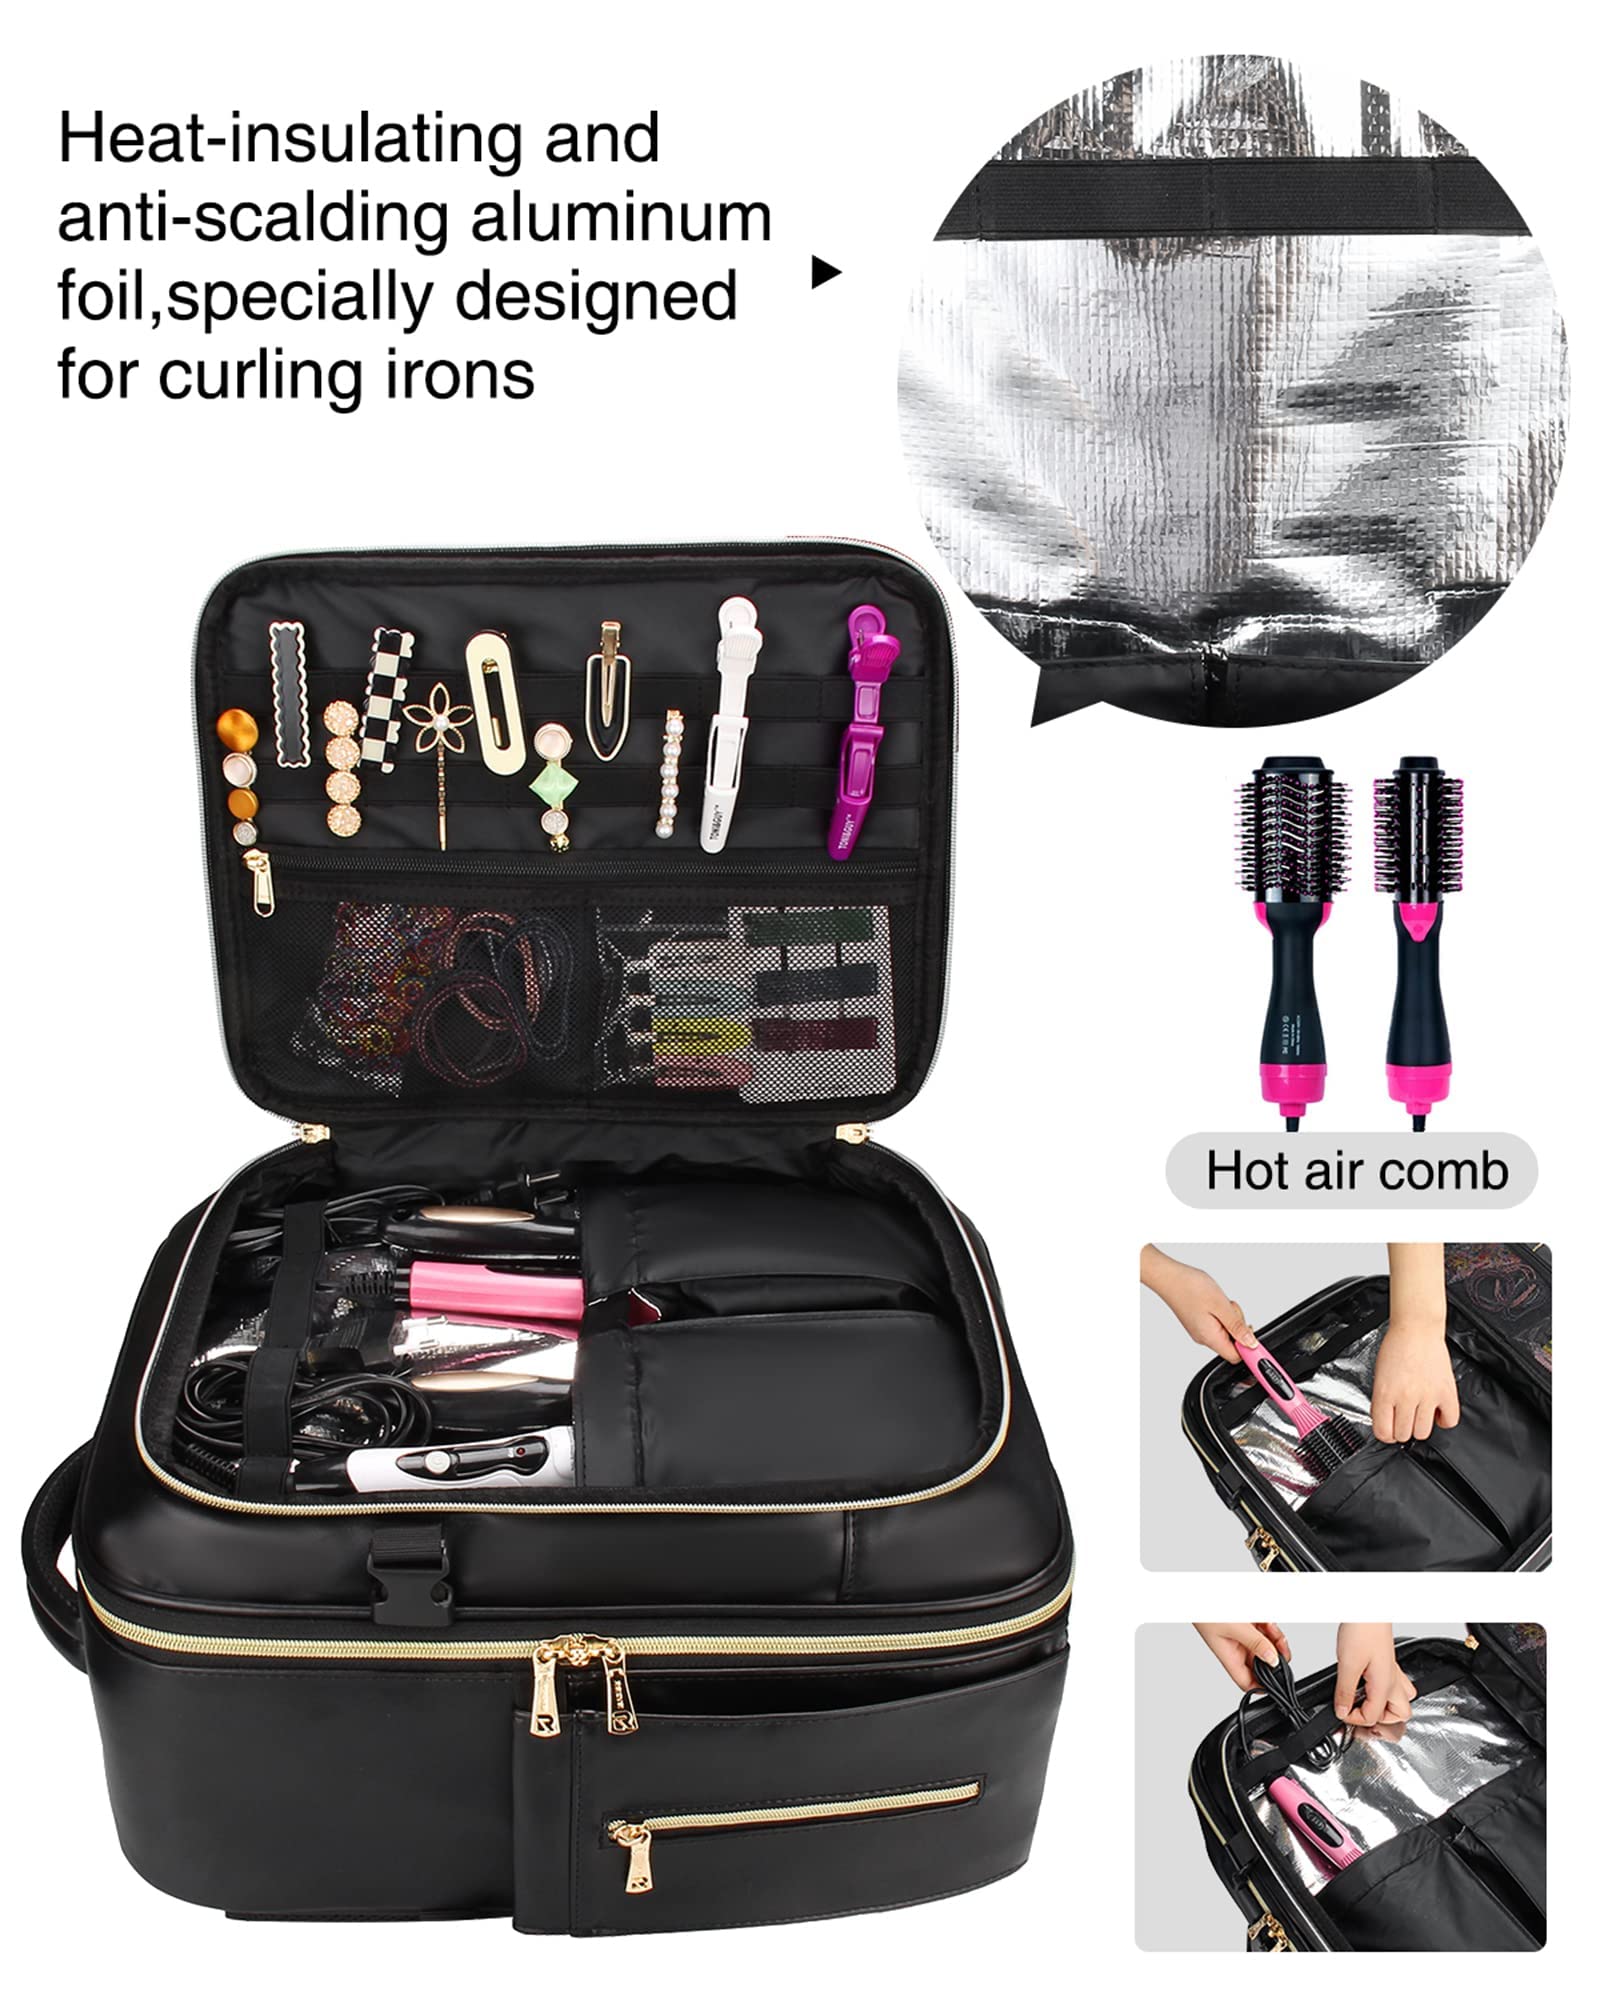 Relavel Makeup Backpack, Professional Makeup Case Extra Large Travel Train Case Makeup Bag for Women Cosmetic Organizer, Makeup Brush Storage Holder, Makeup Artist Kit, with Adjustable High Dividers